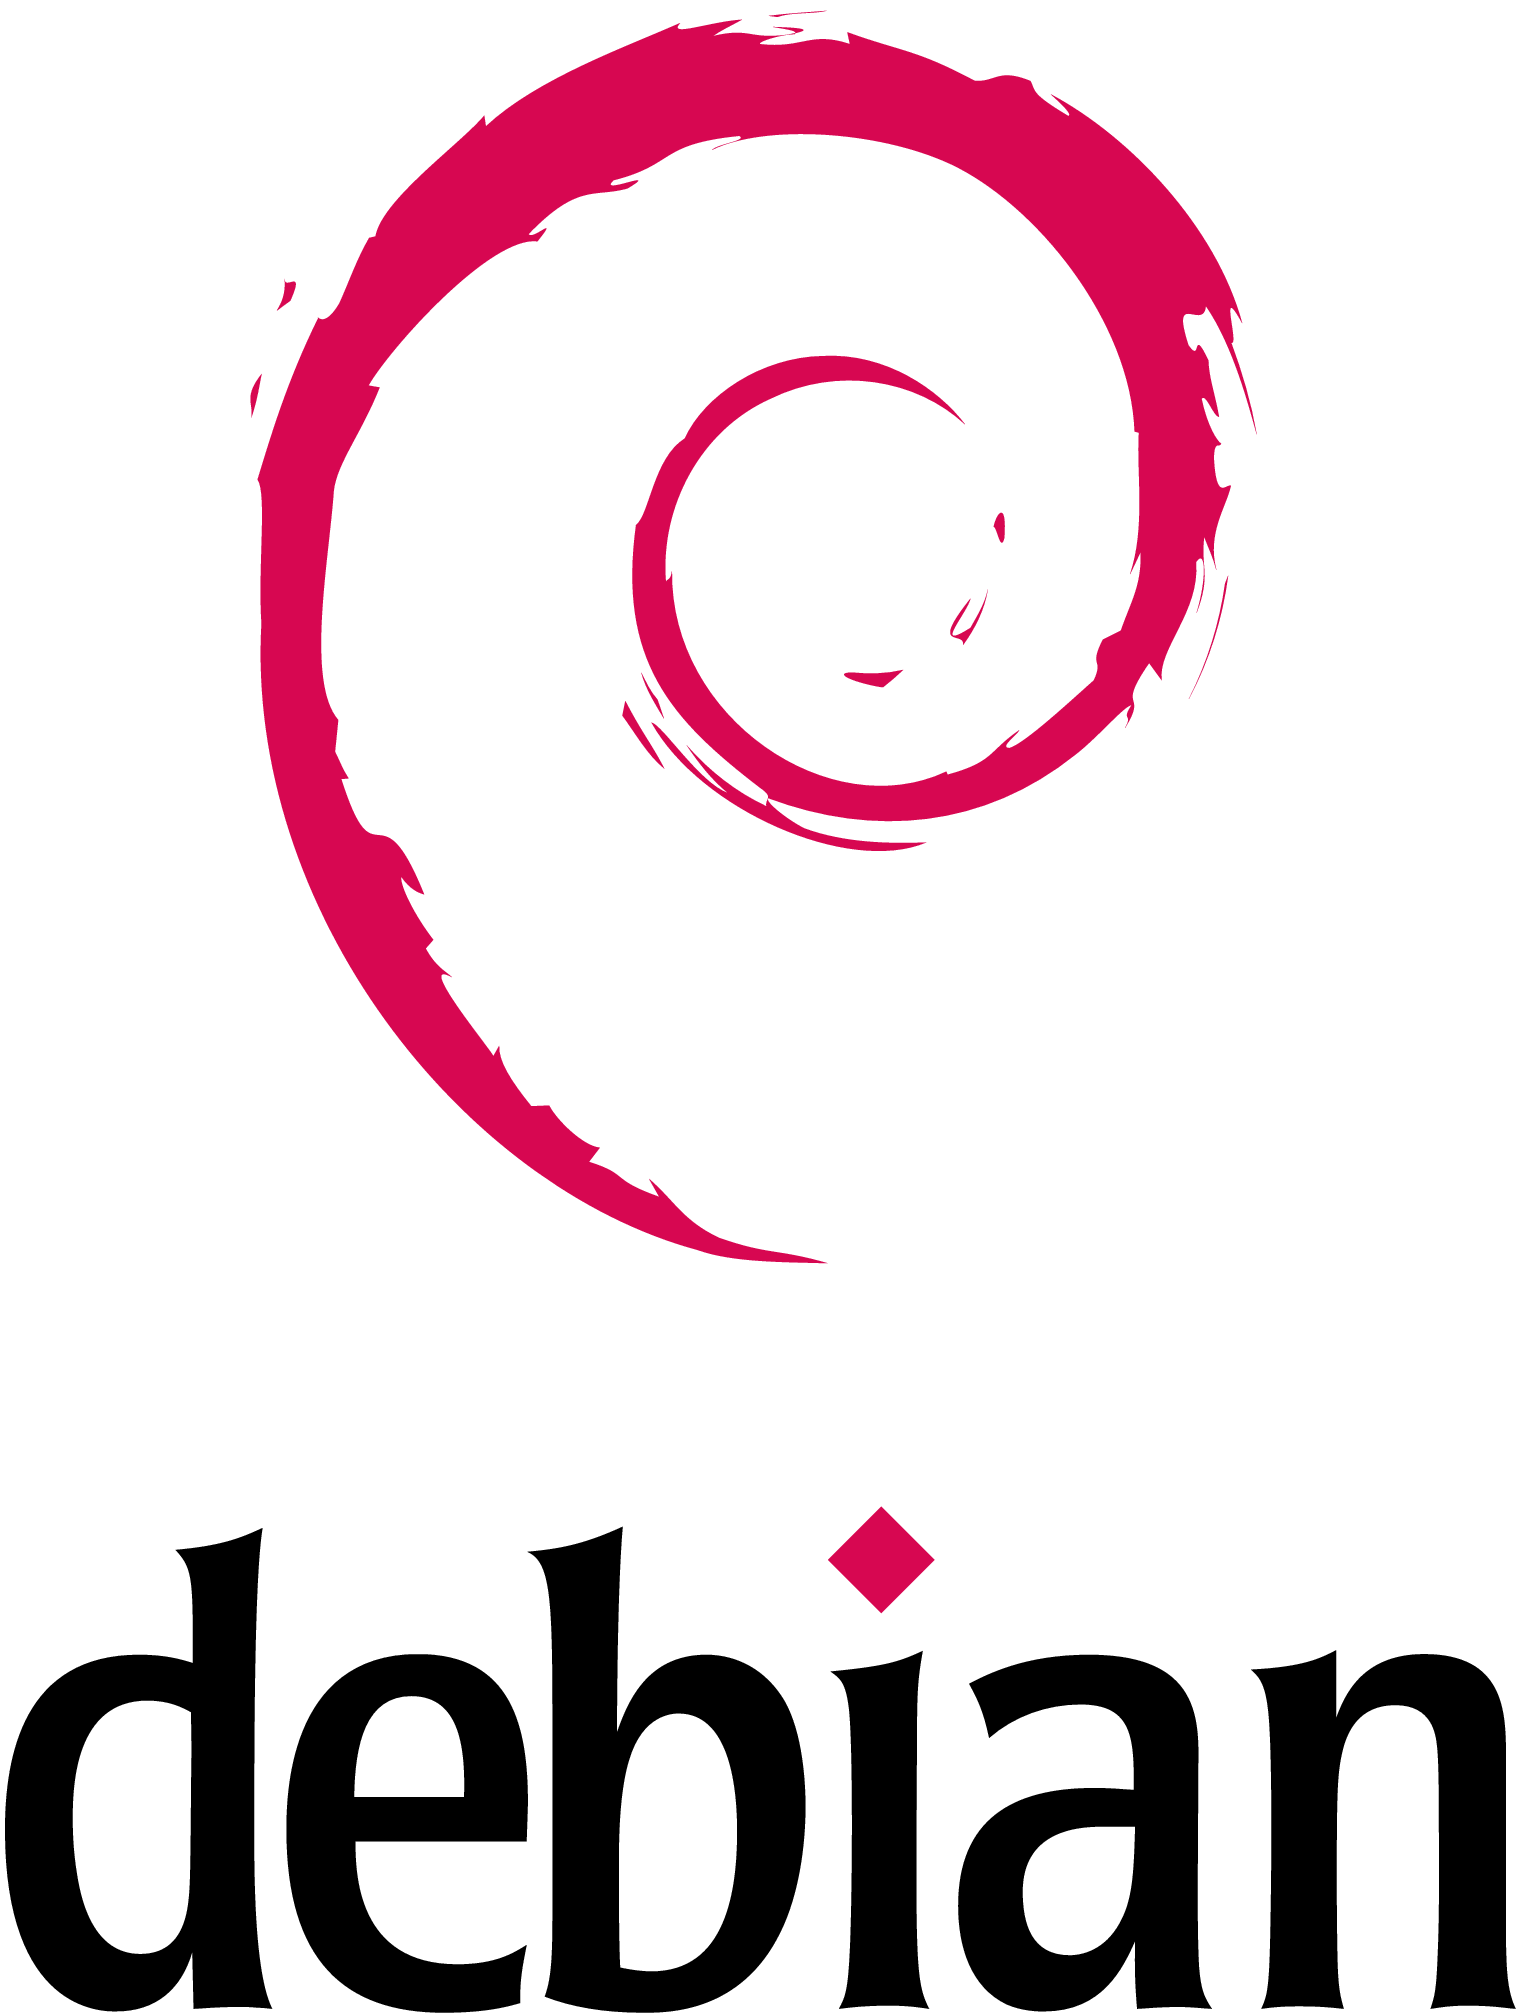 Sul mio VPS gira Debian!